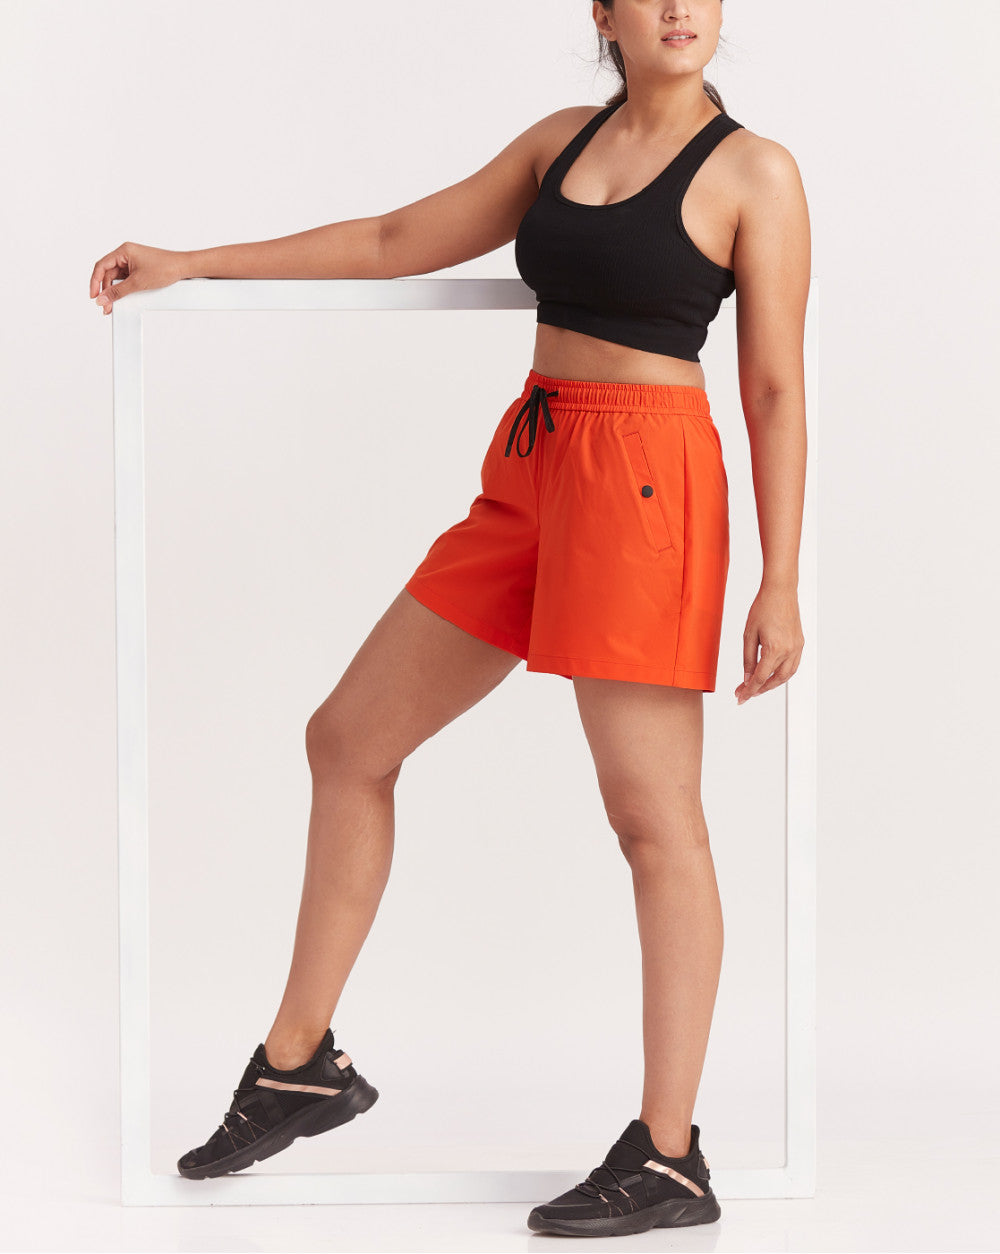 Mid Rise Running Shorts - Spicy Orange